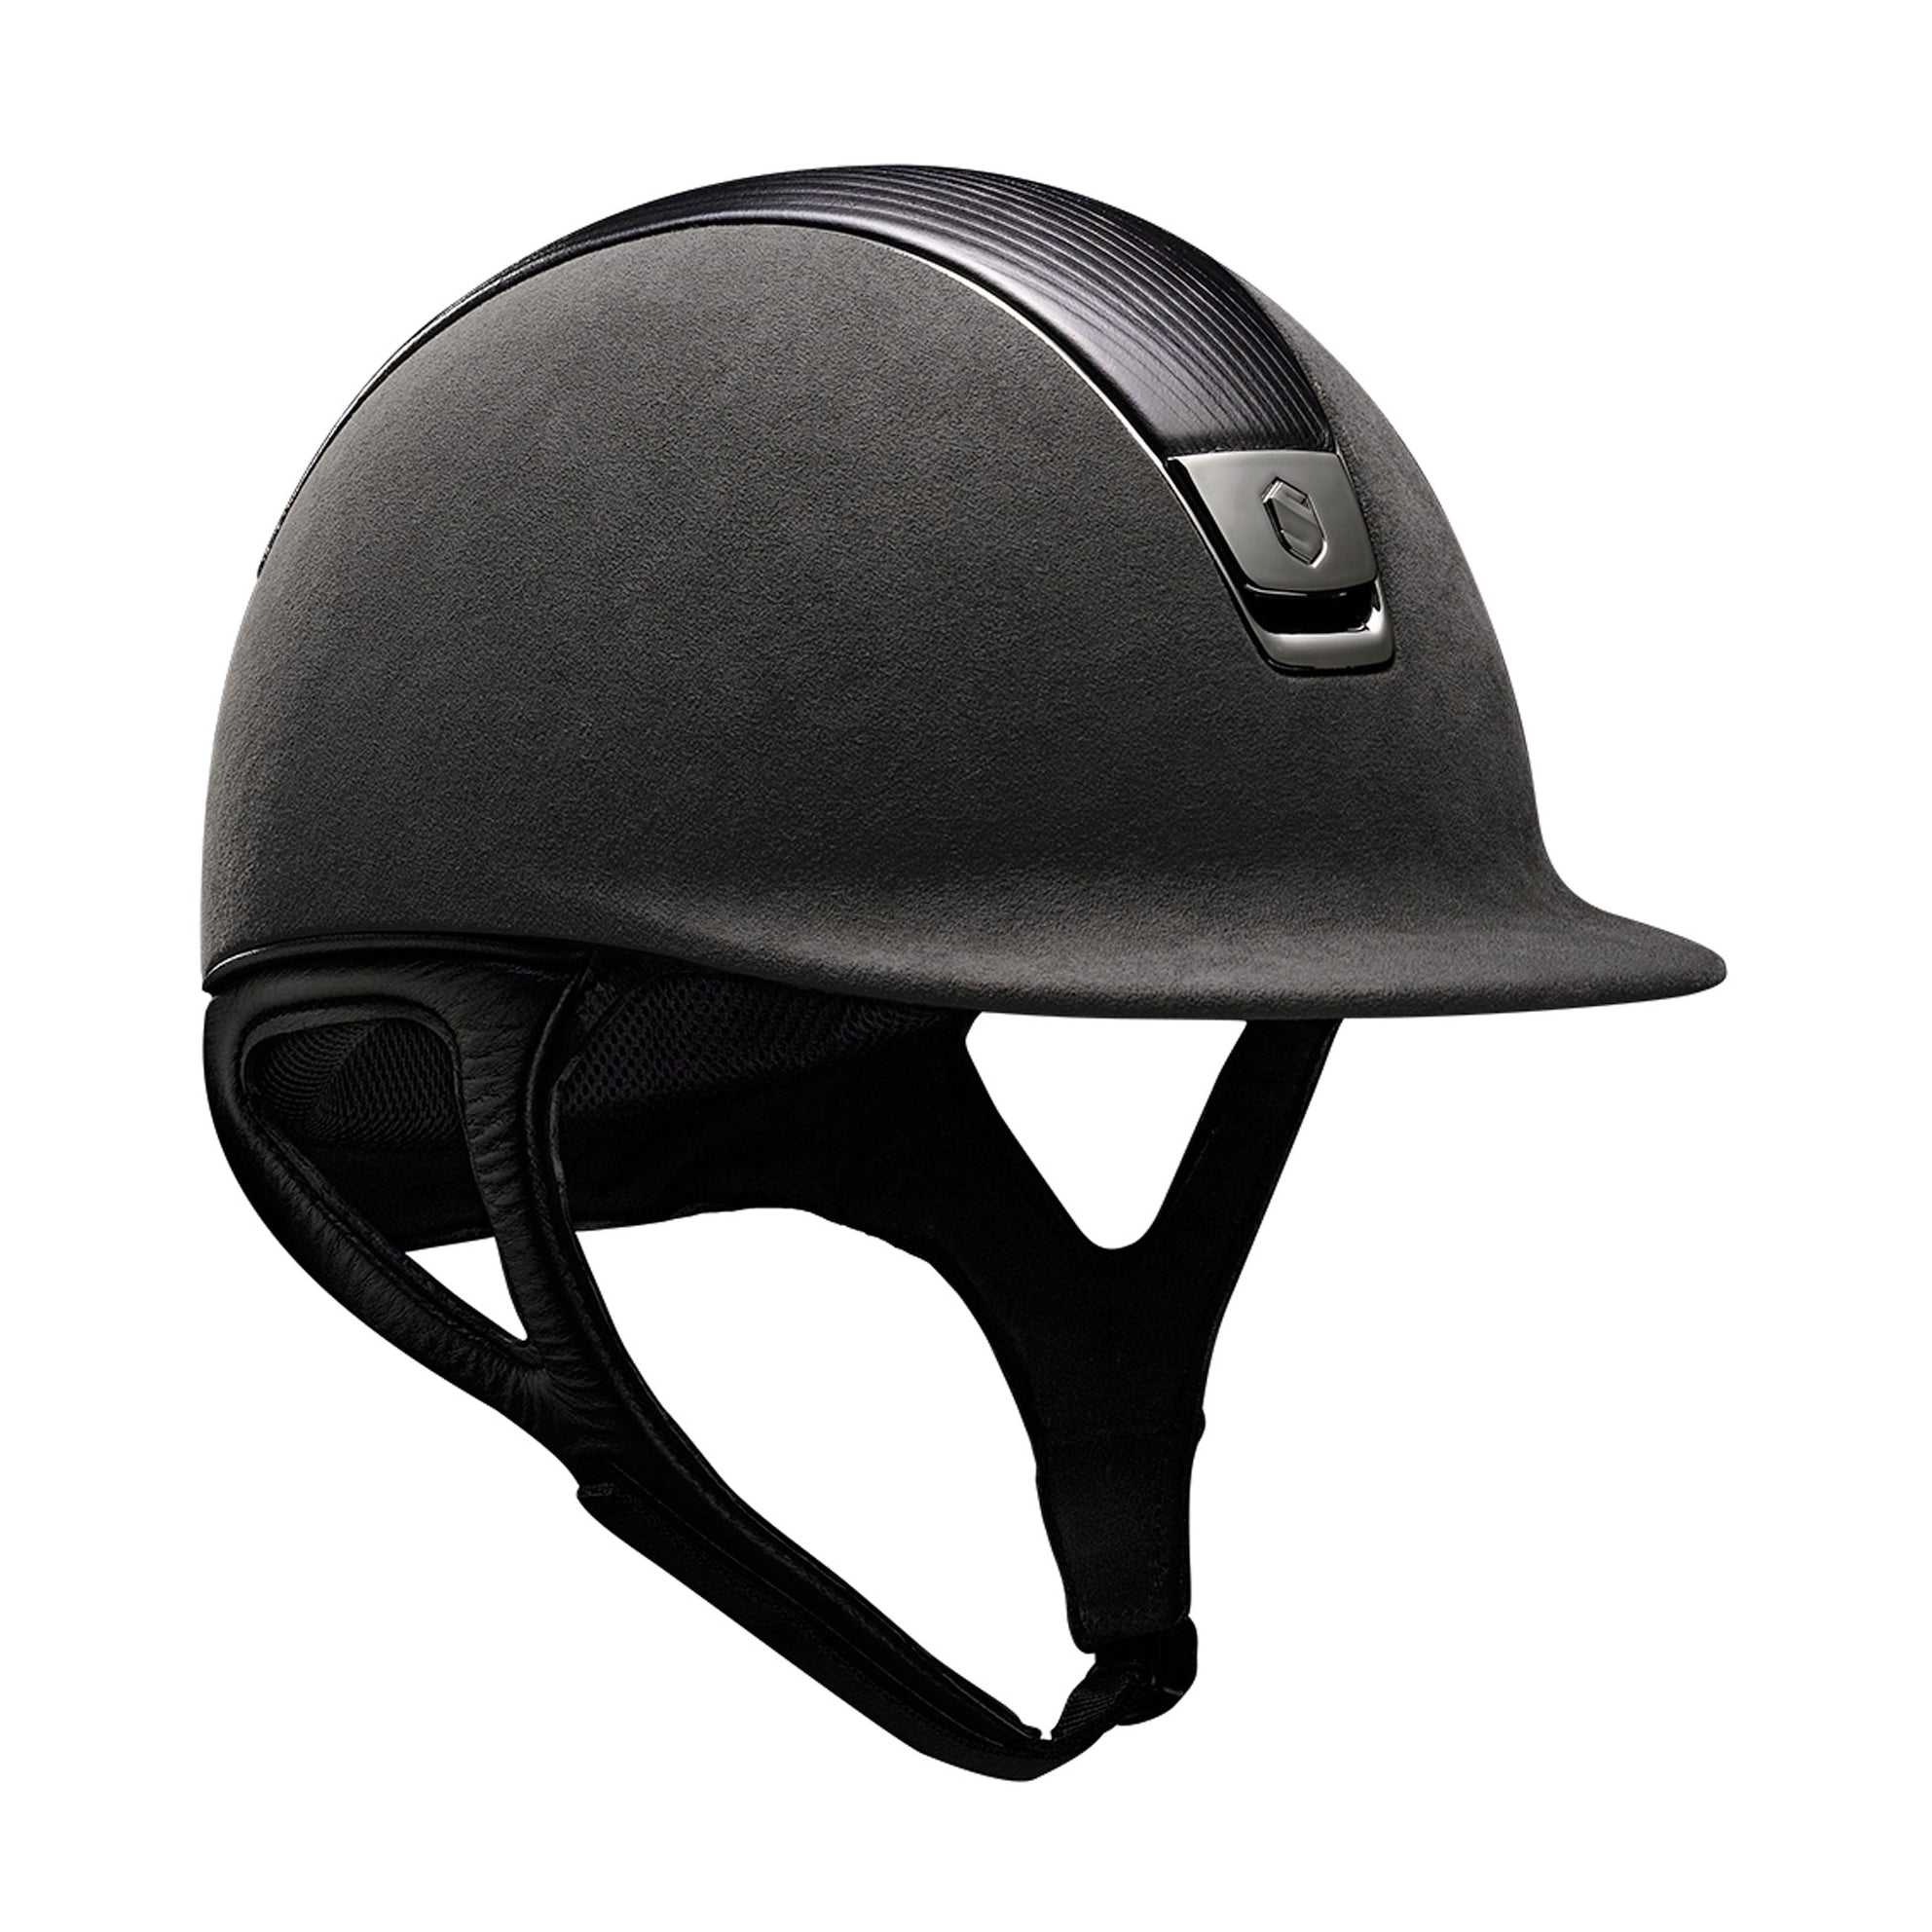 Samshield 2.0 Premium Helmet